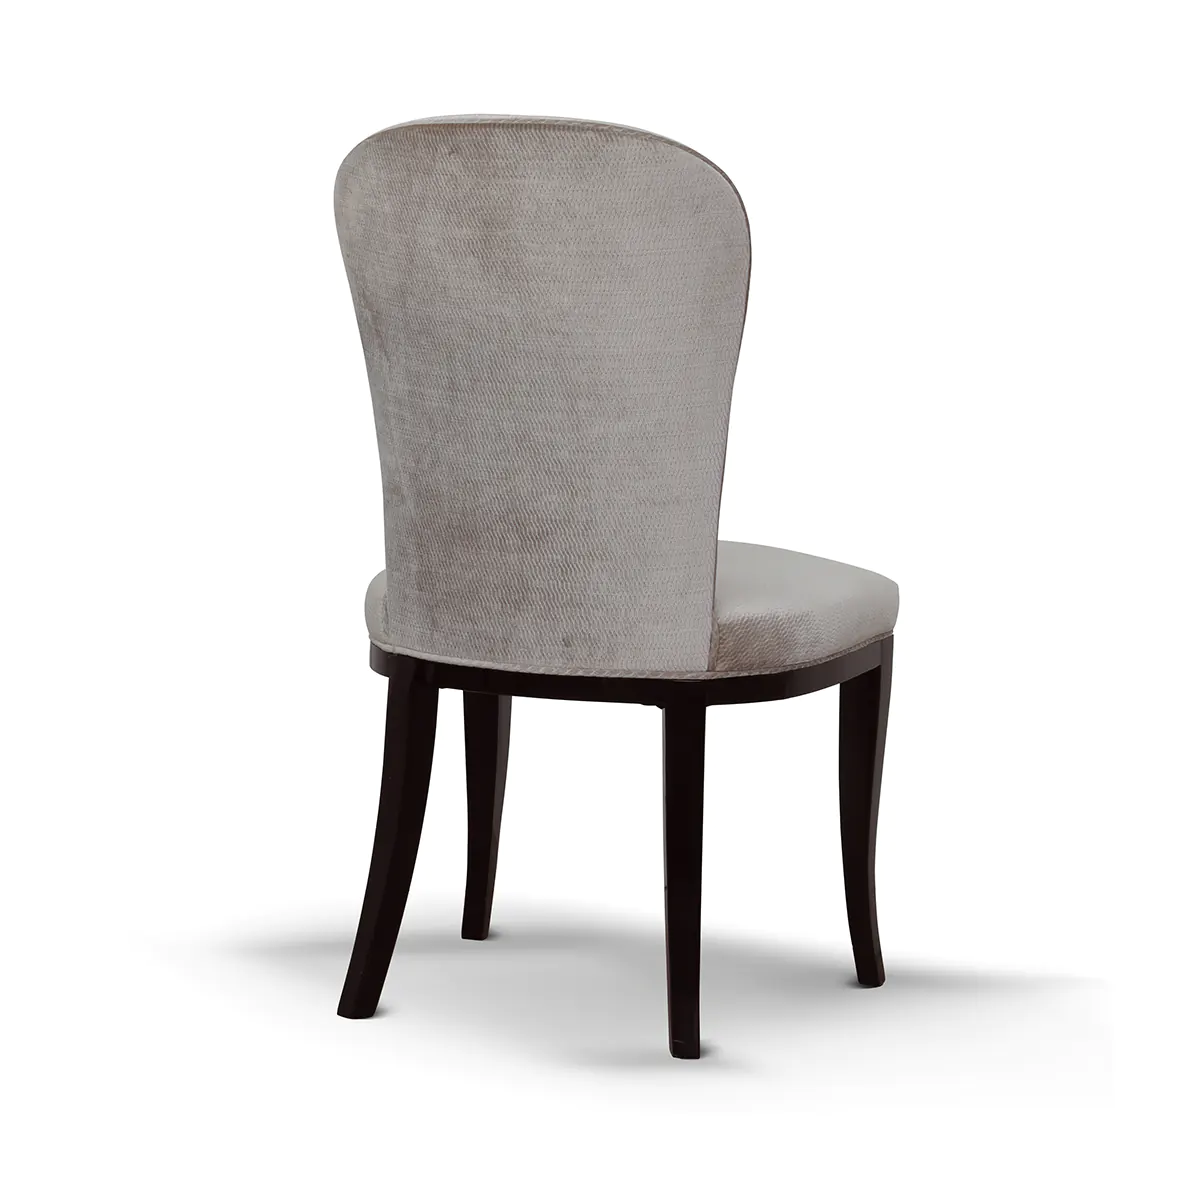 Chair made in italy su misura 3